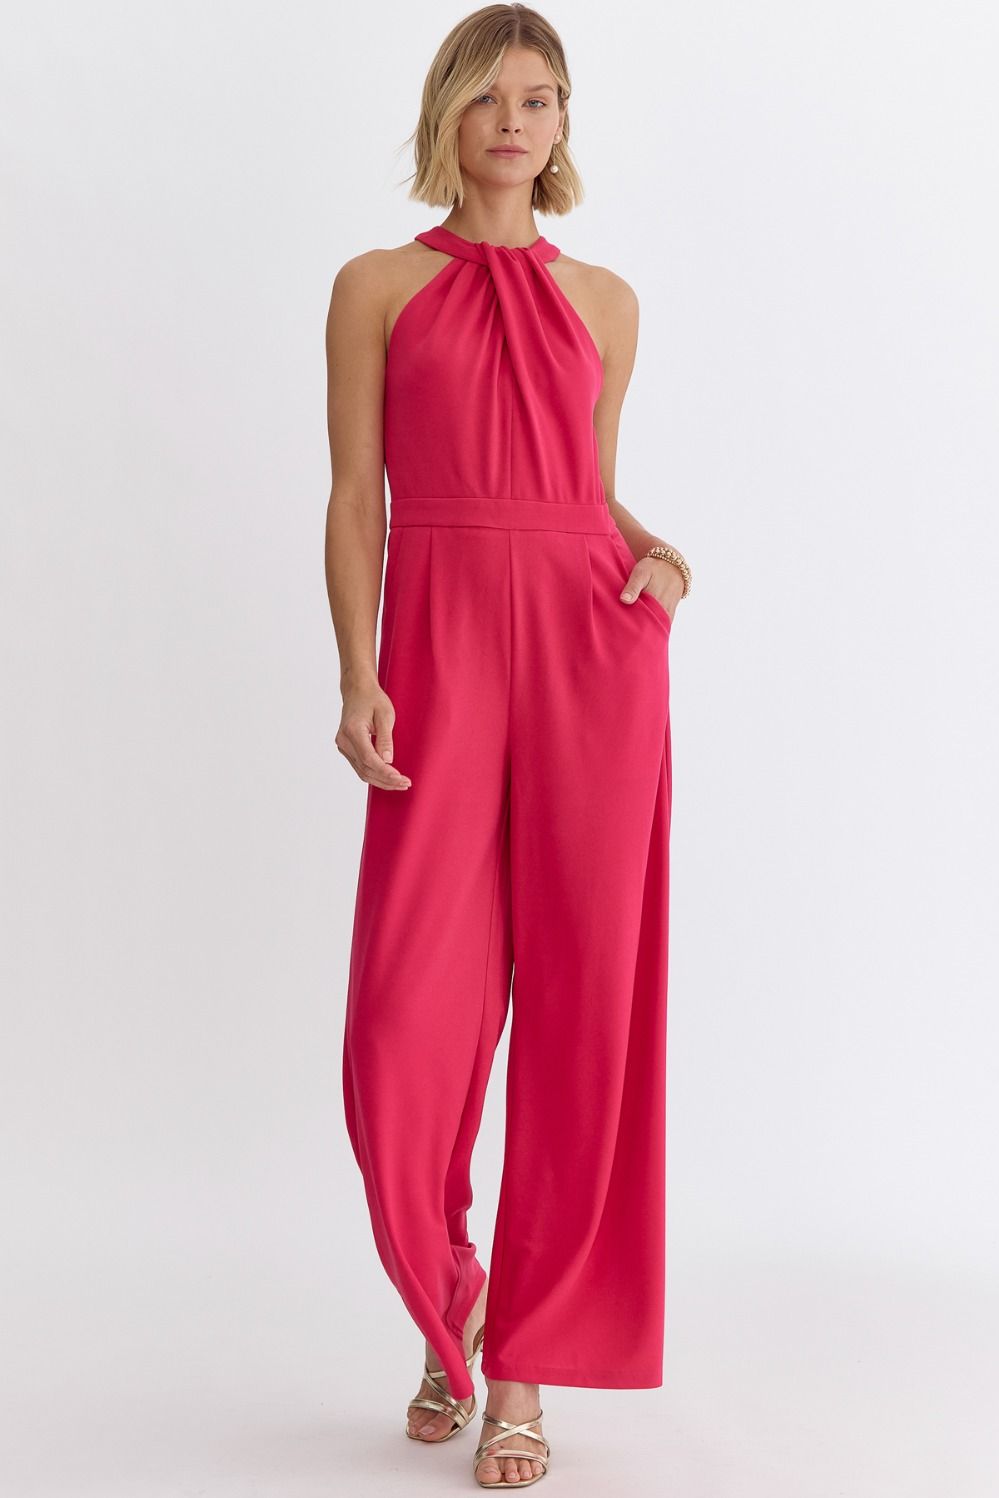 Entro Live It Up Jumpsuit - Hot Pink, halter neck, sleeveless, pockets, pleated pants, pockets, wide leg, keyhole back